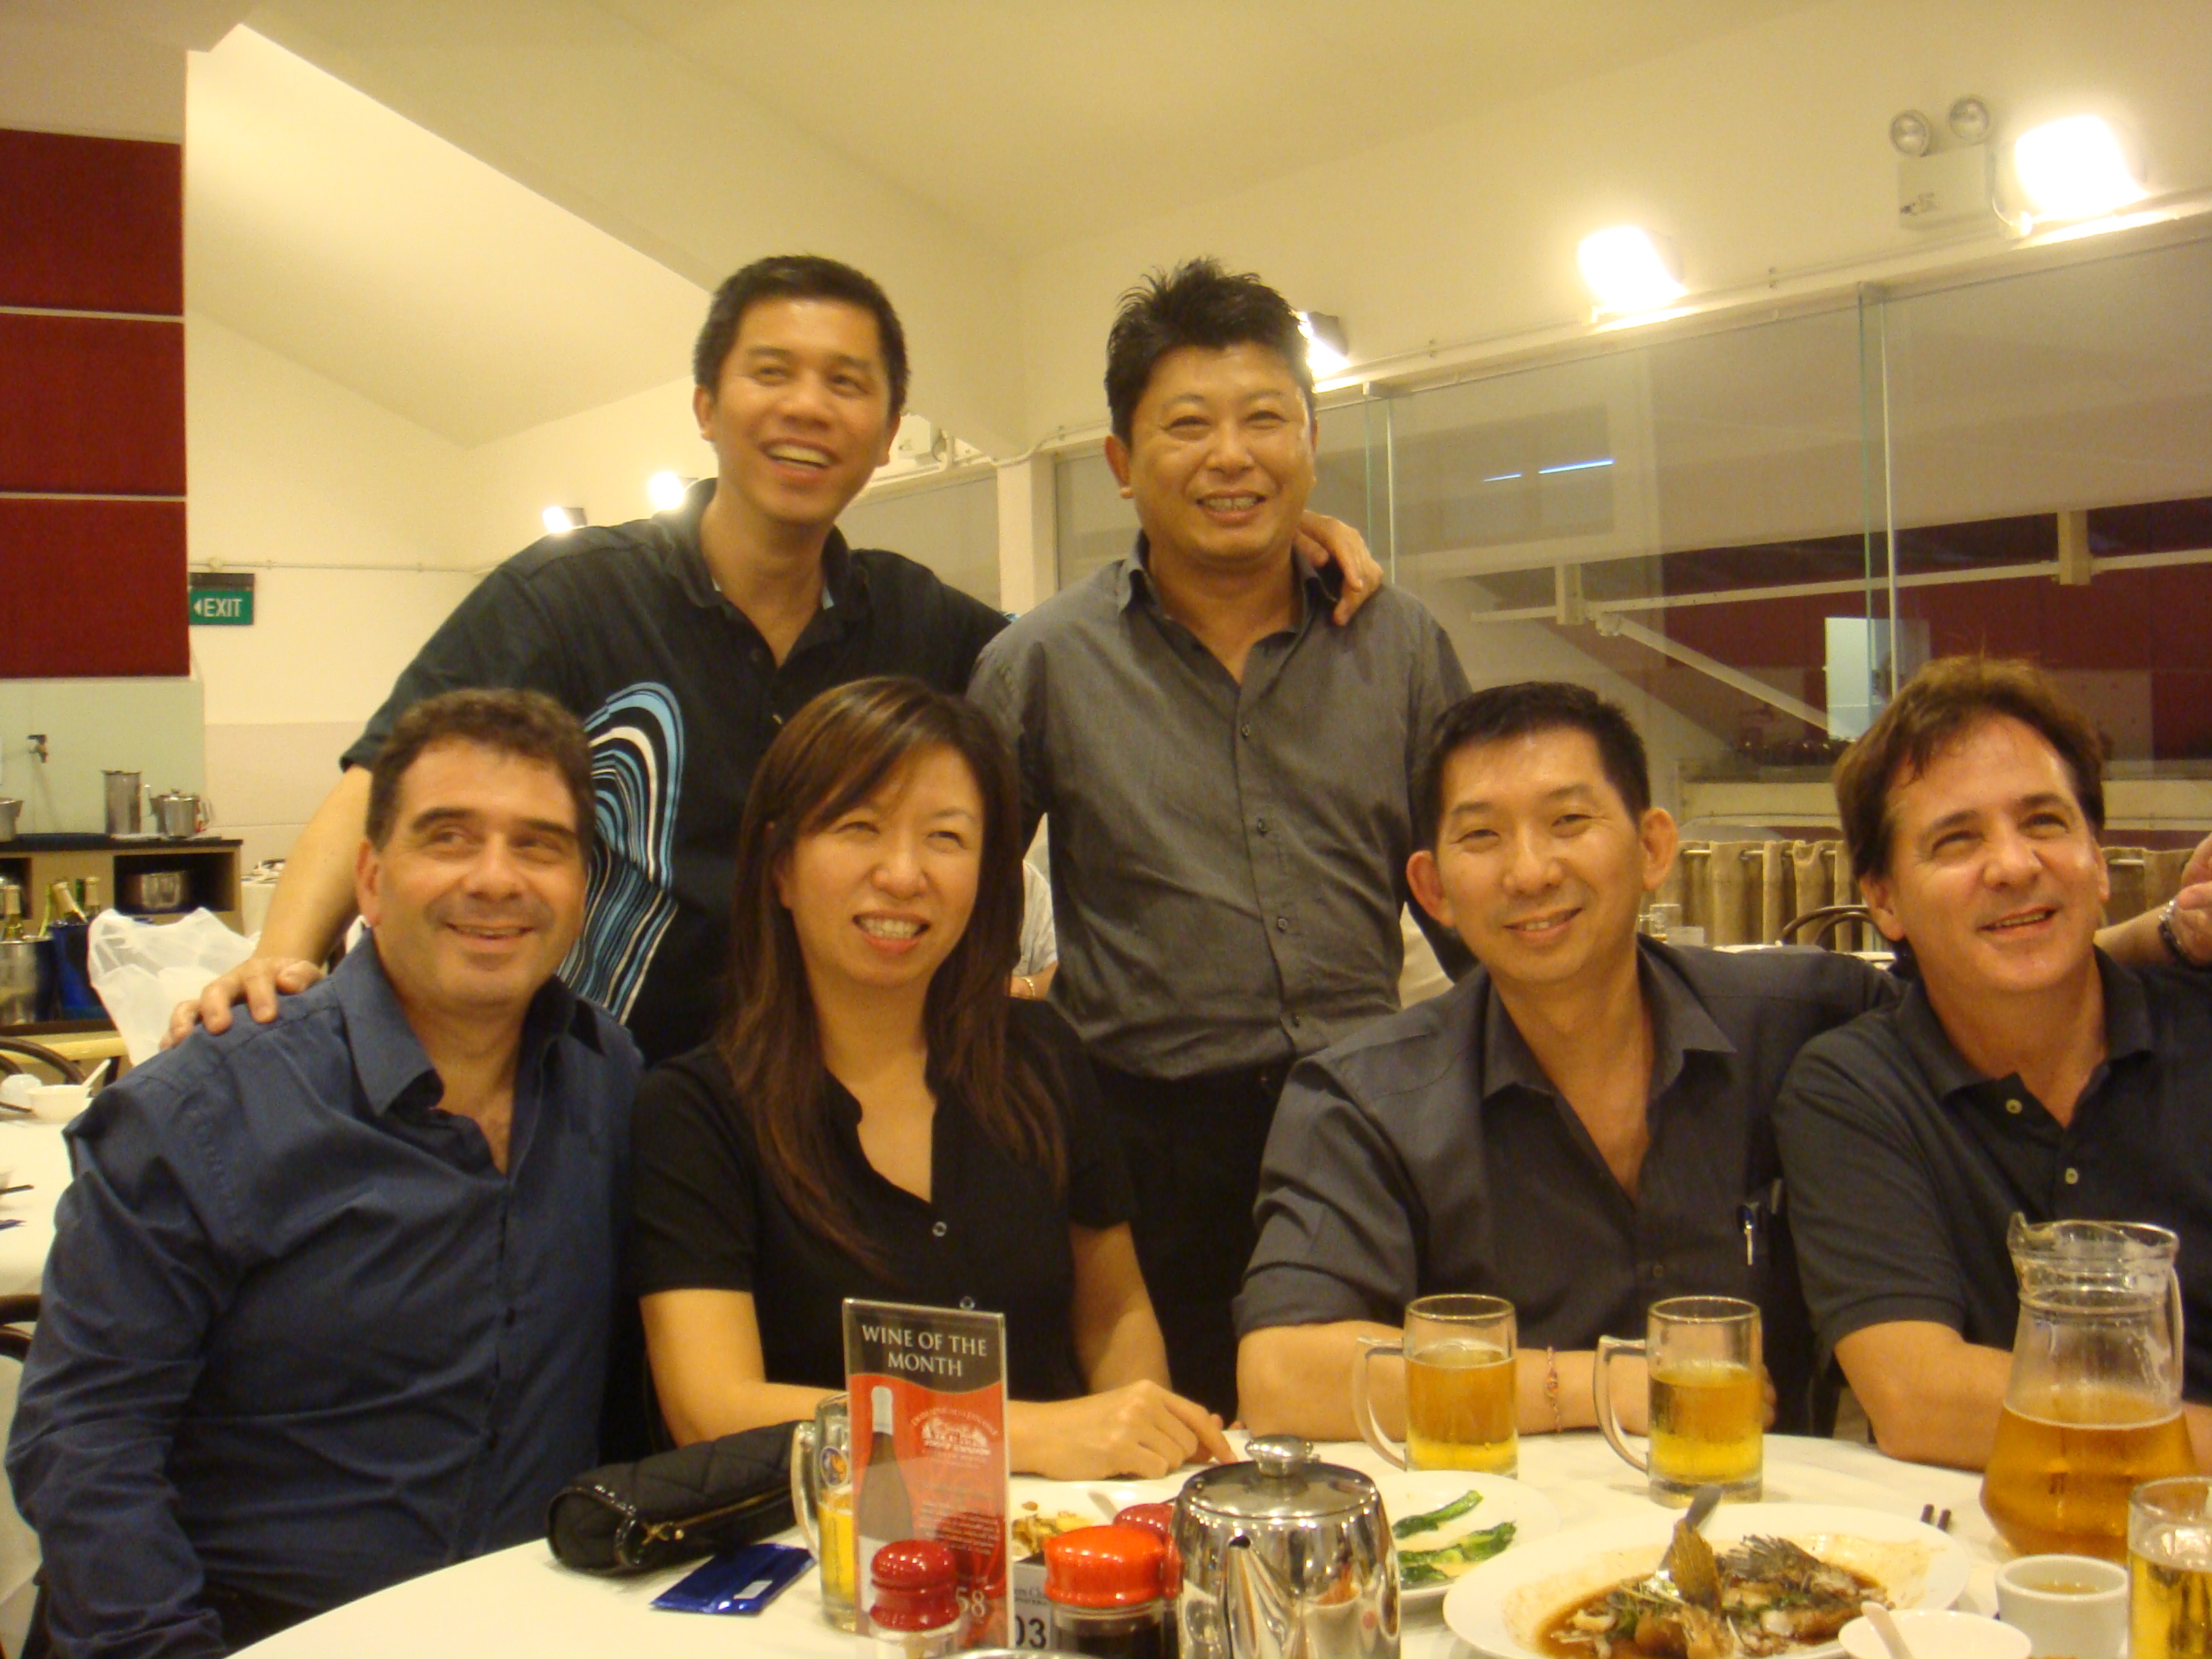 Singapore National Team,Culinary World Champions